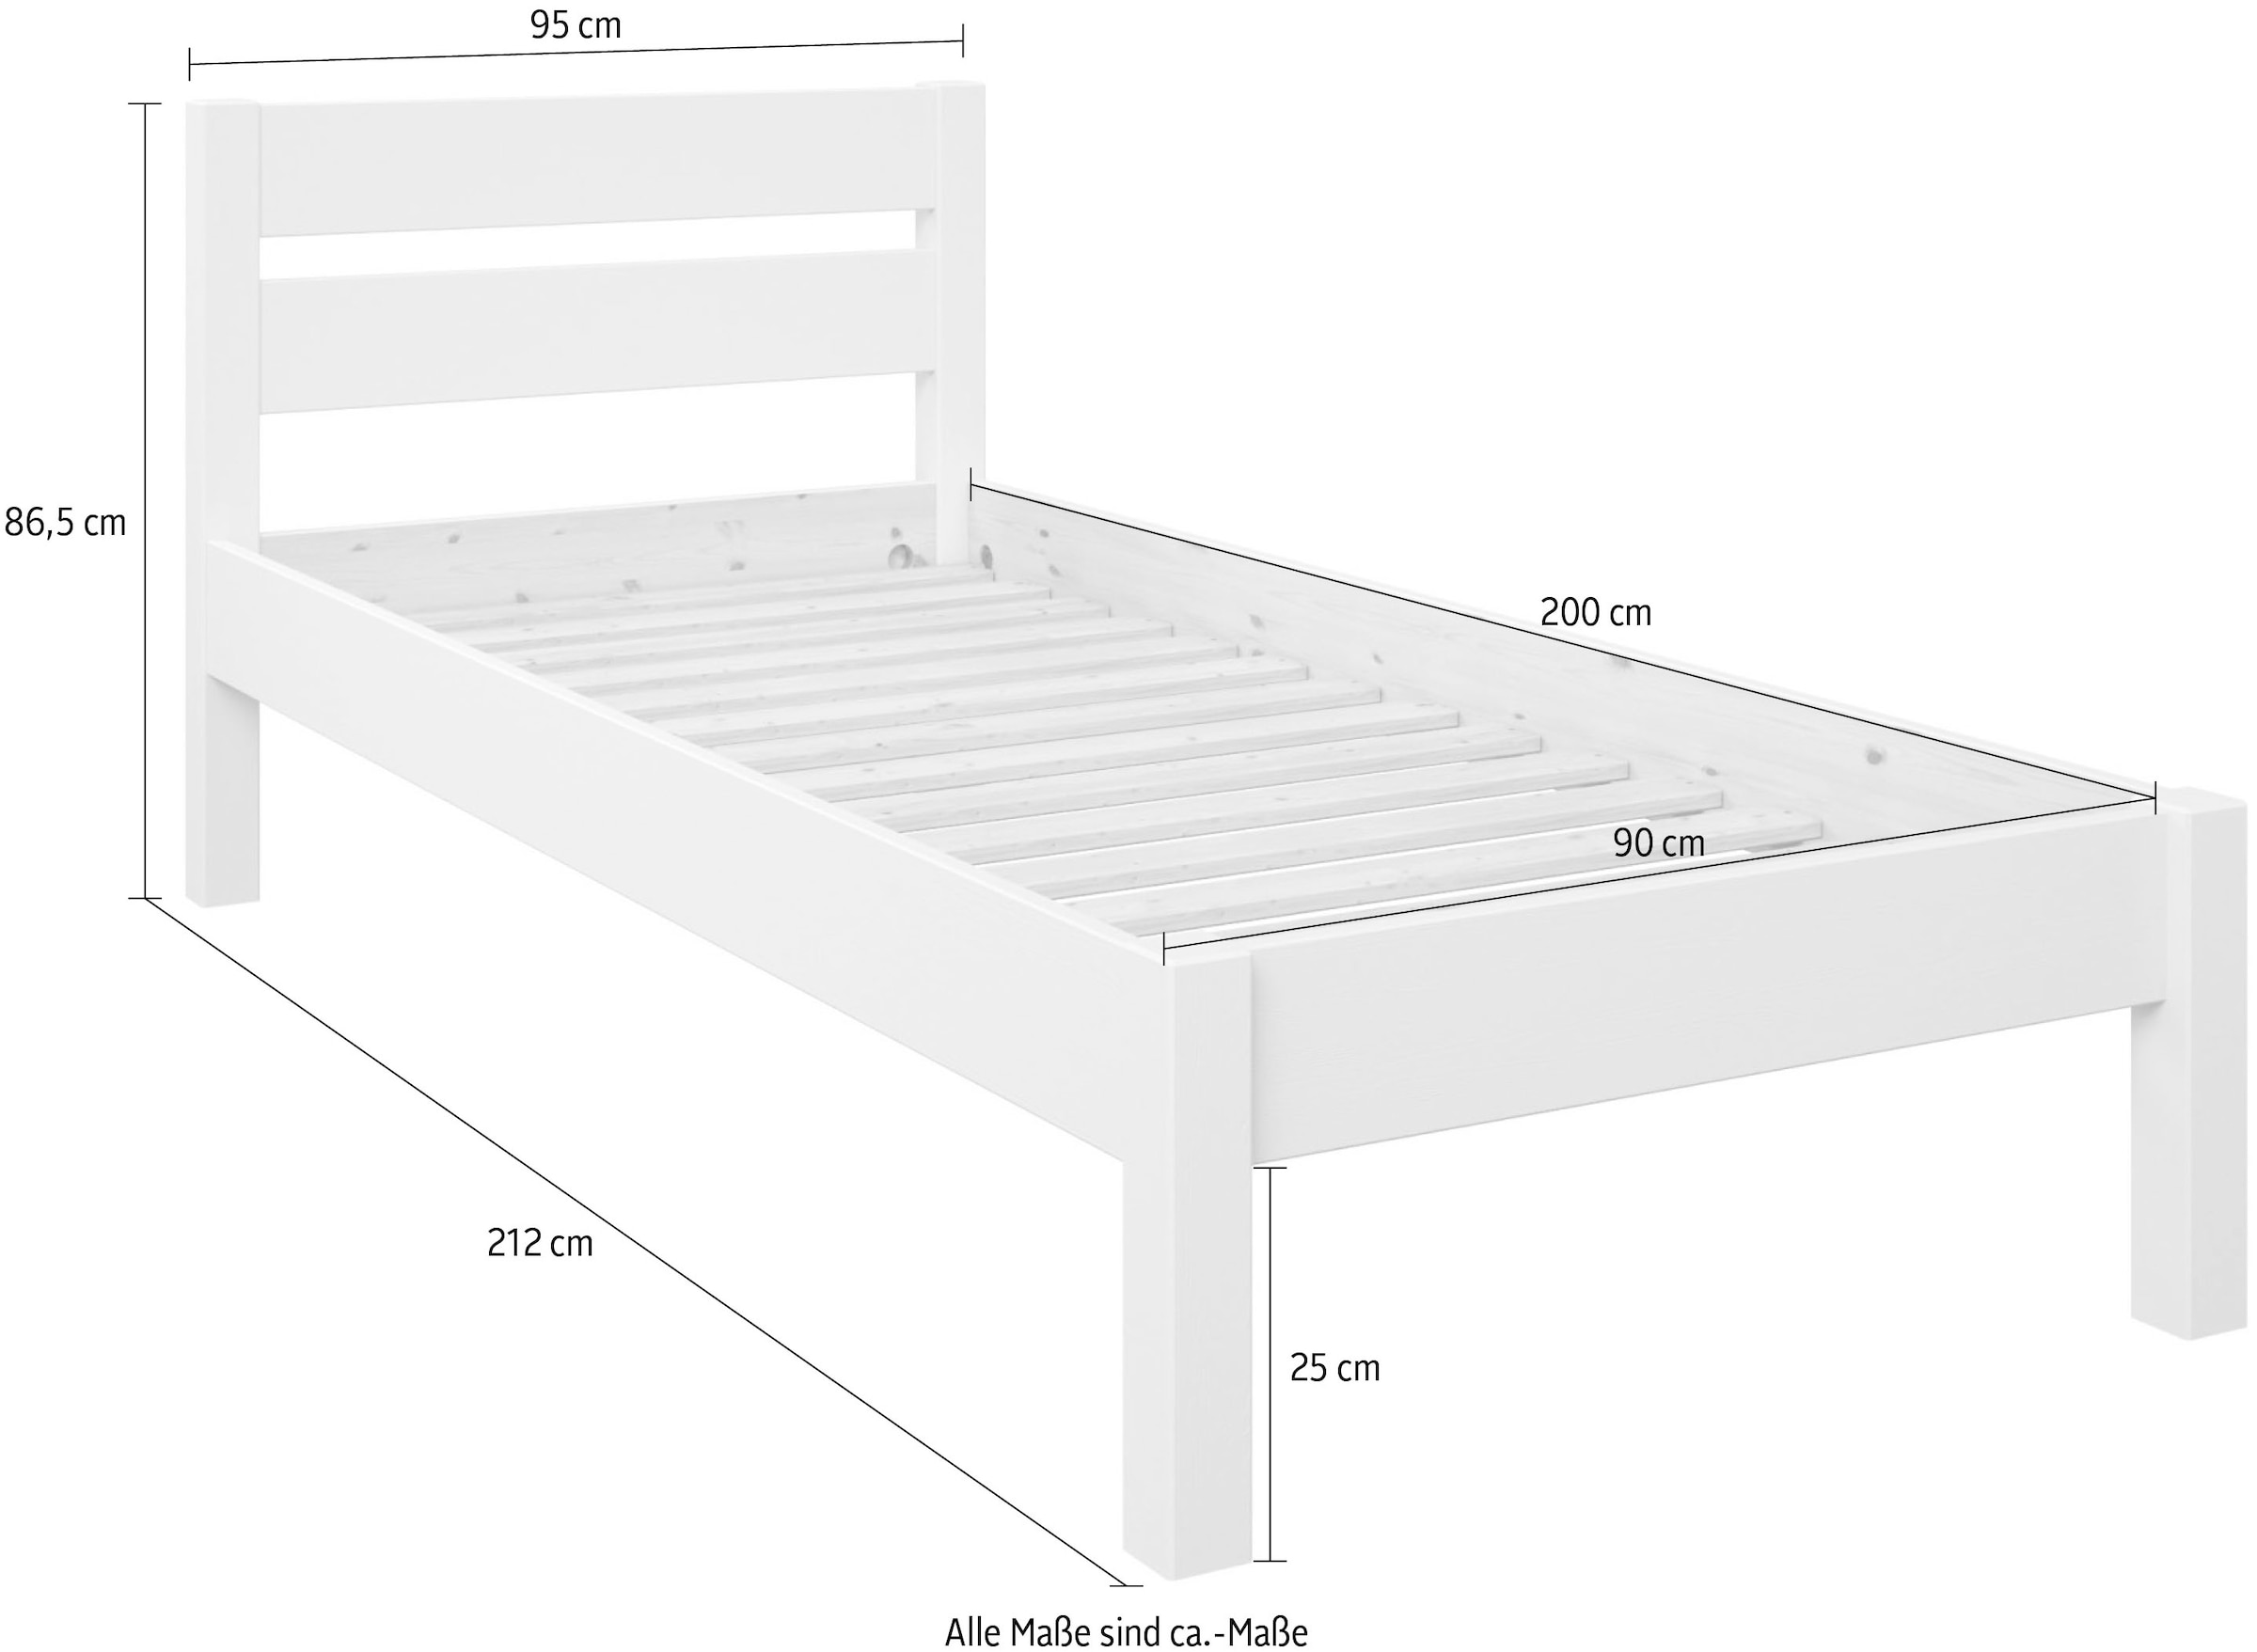 Home affaire Bett »"NOA " ideal für das Jugendzimmer«, zertifiziertes Massivholz, skandinavisches Design